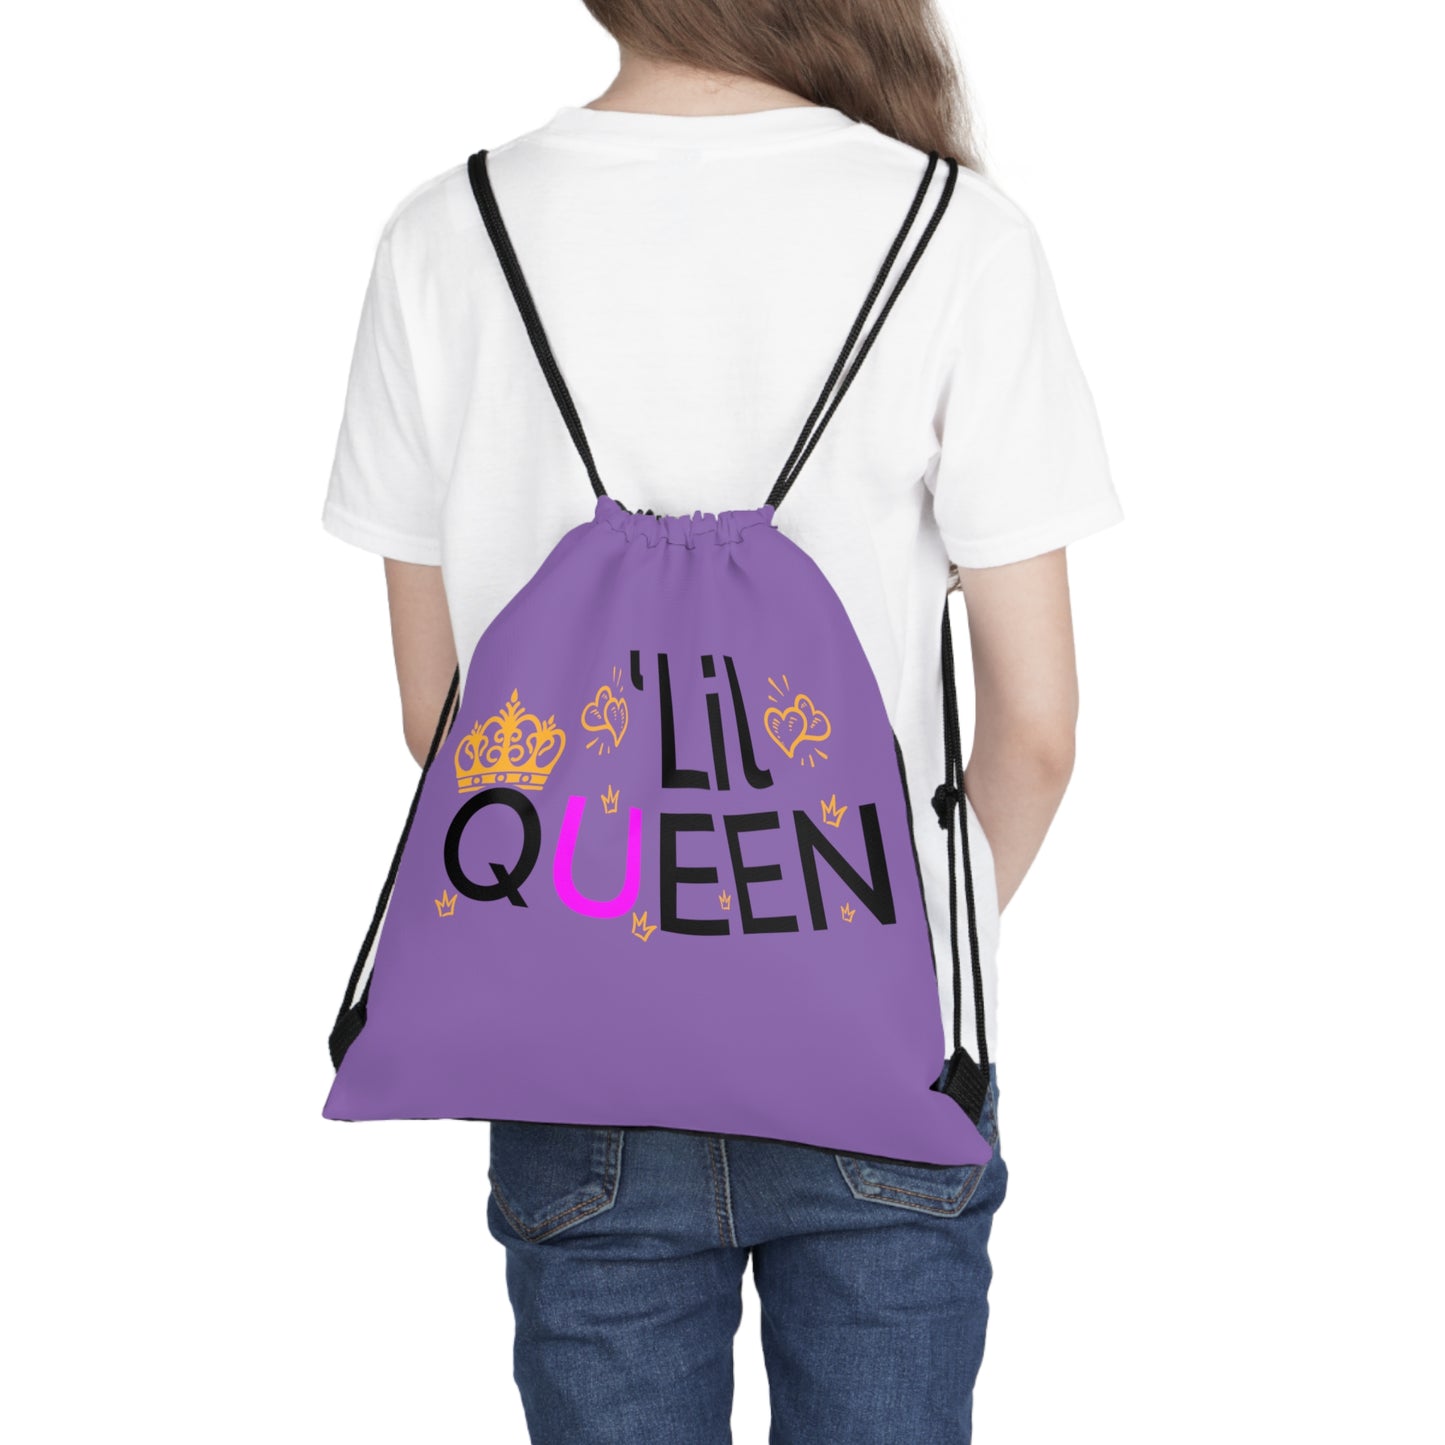 'Lil Queen Drawstring Bag